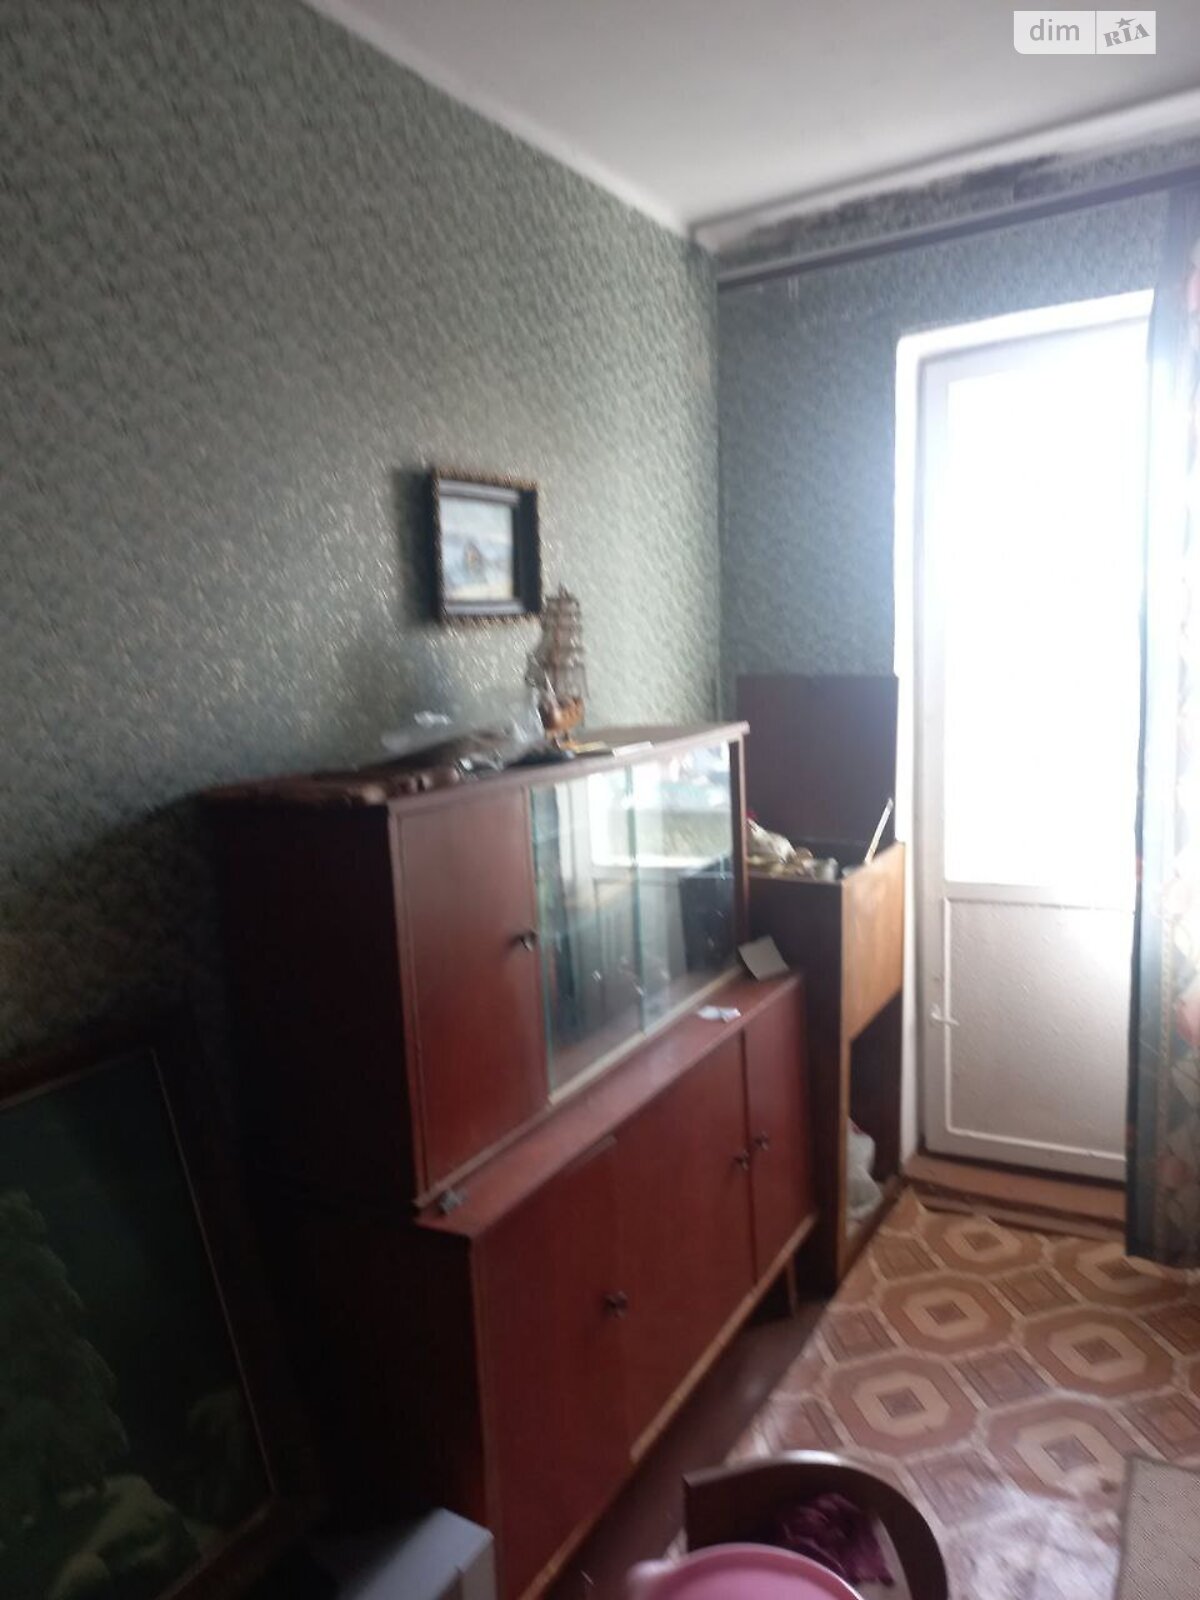 Продажа однокомнатной квартиры в Ровно, на ул. Гайдамацкая 1, район Чайка фото 1